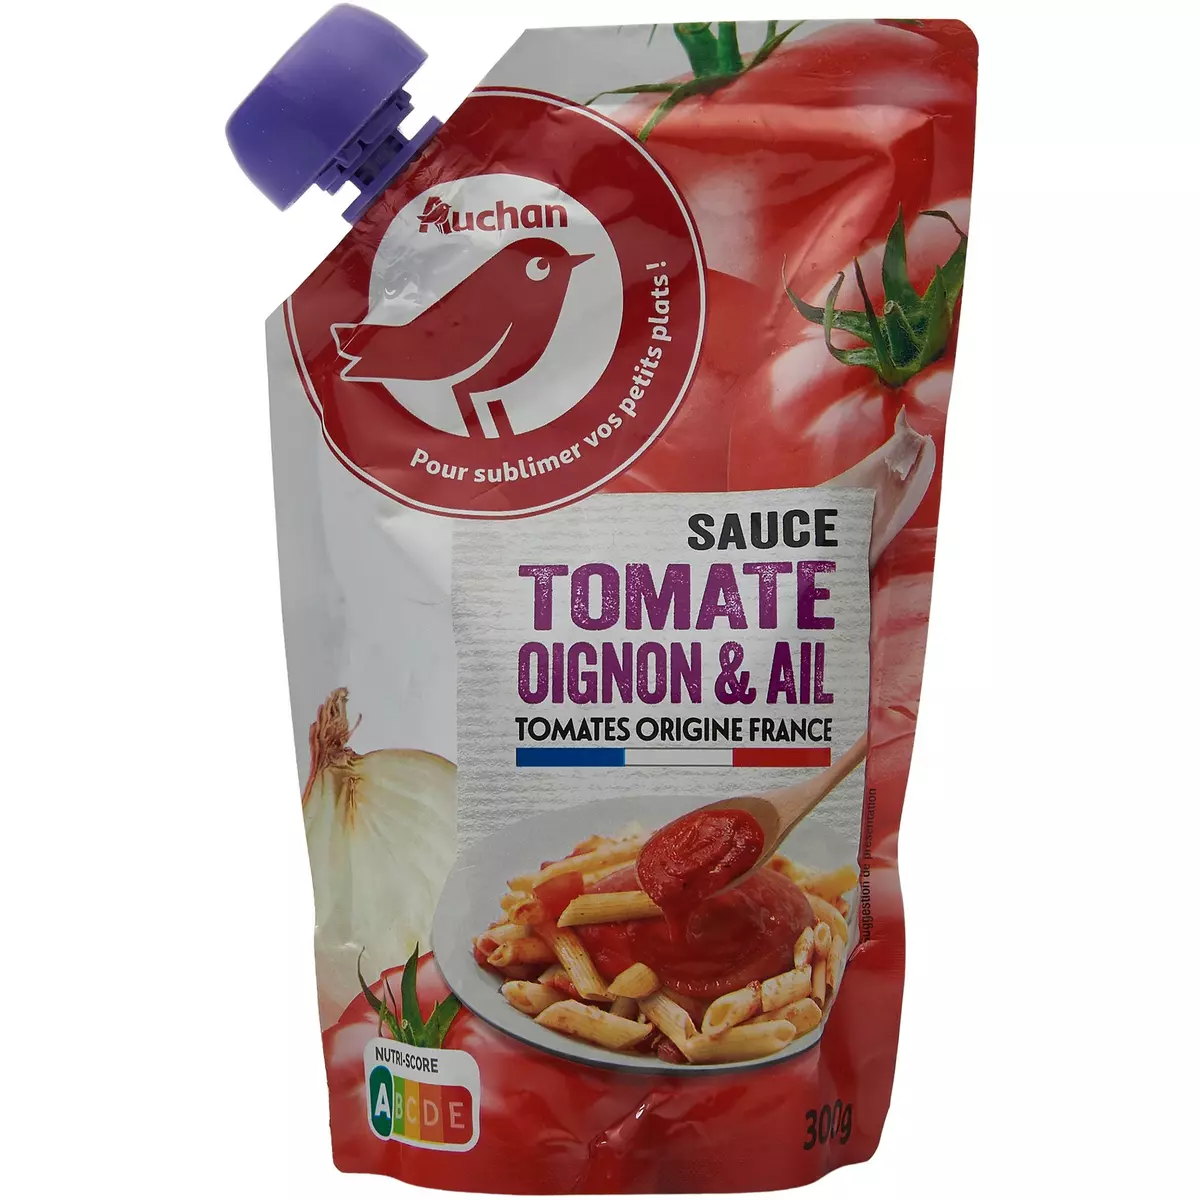 AUCHAN Sauce tomate oignon ail sachet 300g